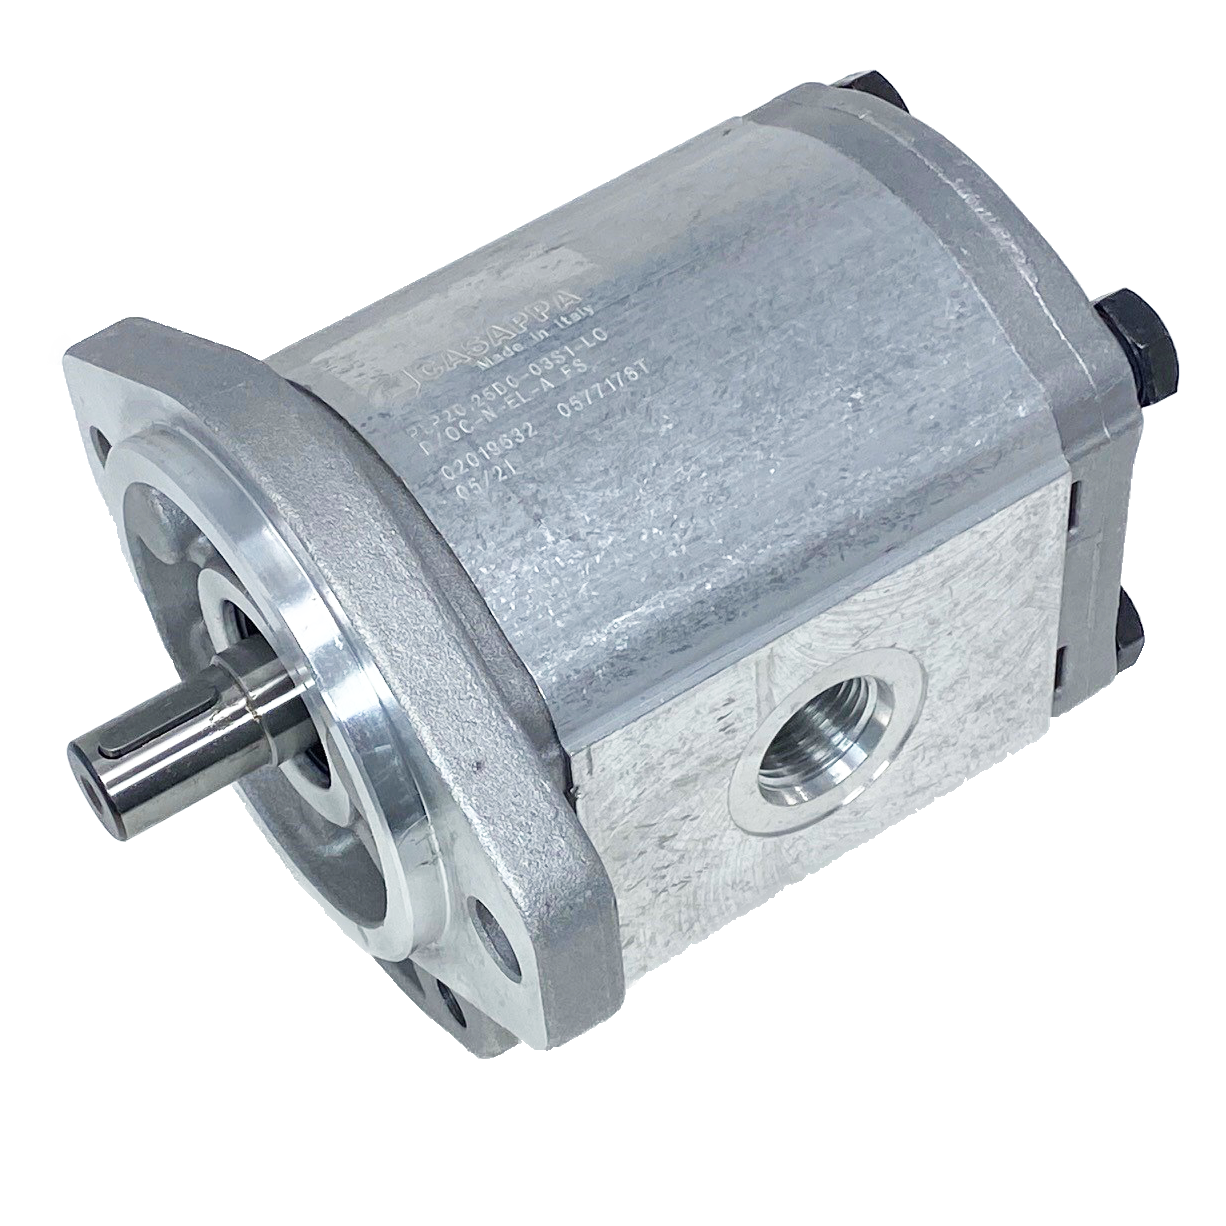 PLP20.25D0-31S1-LOD/OC-N-EL : Casappa Polaris Gear Pump, 26.42cc, 2465psi Rated, 3045RPM, CW, 5/8" Bore x 5/32" Key Shaft, SAE A 2-Bolt Flange, 0.75 (3/4") #12 SAE Inlet, 0.625 (5/8") #10 SAE Outlet, Aluminum Body & Flange